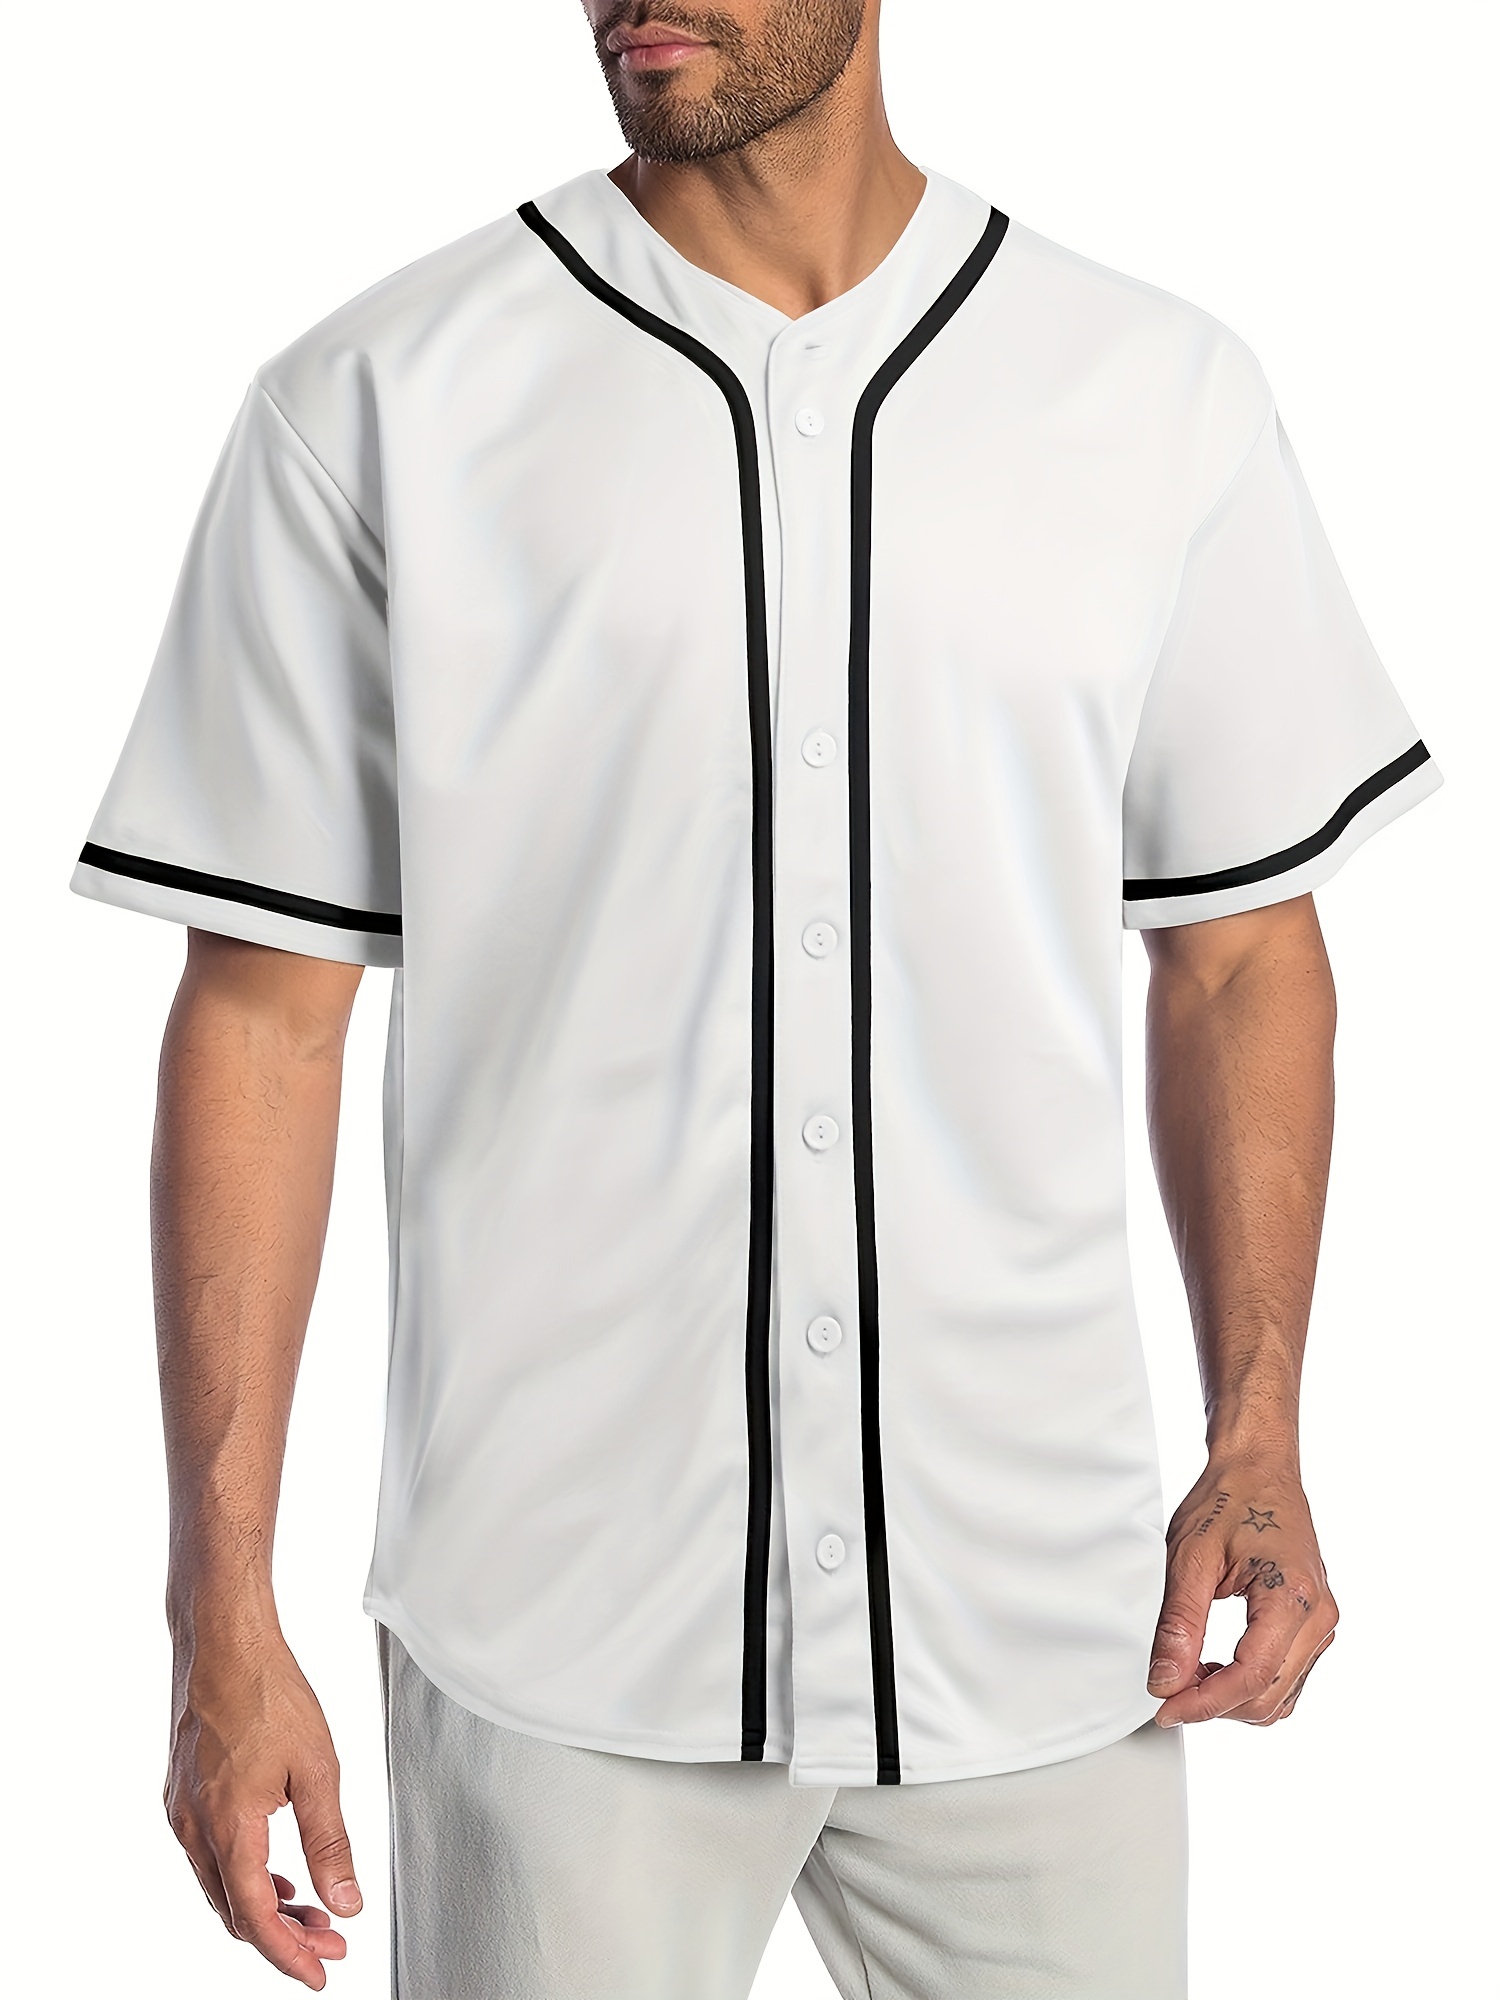 Baseball Jersey Blank V-neck Full Button Shirts Men/Boy Breathable Softball  Uniform Any Color Birthday Gift Hip Hop Street Style